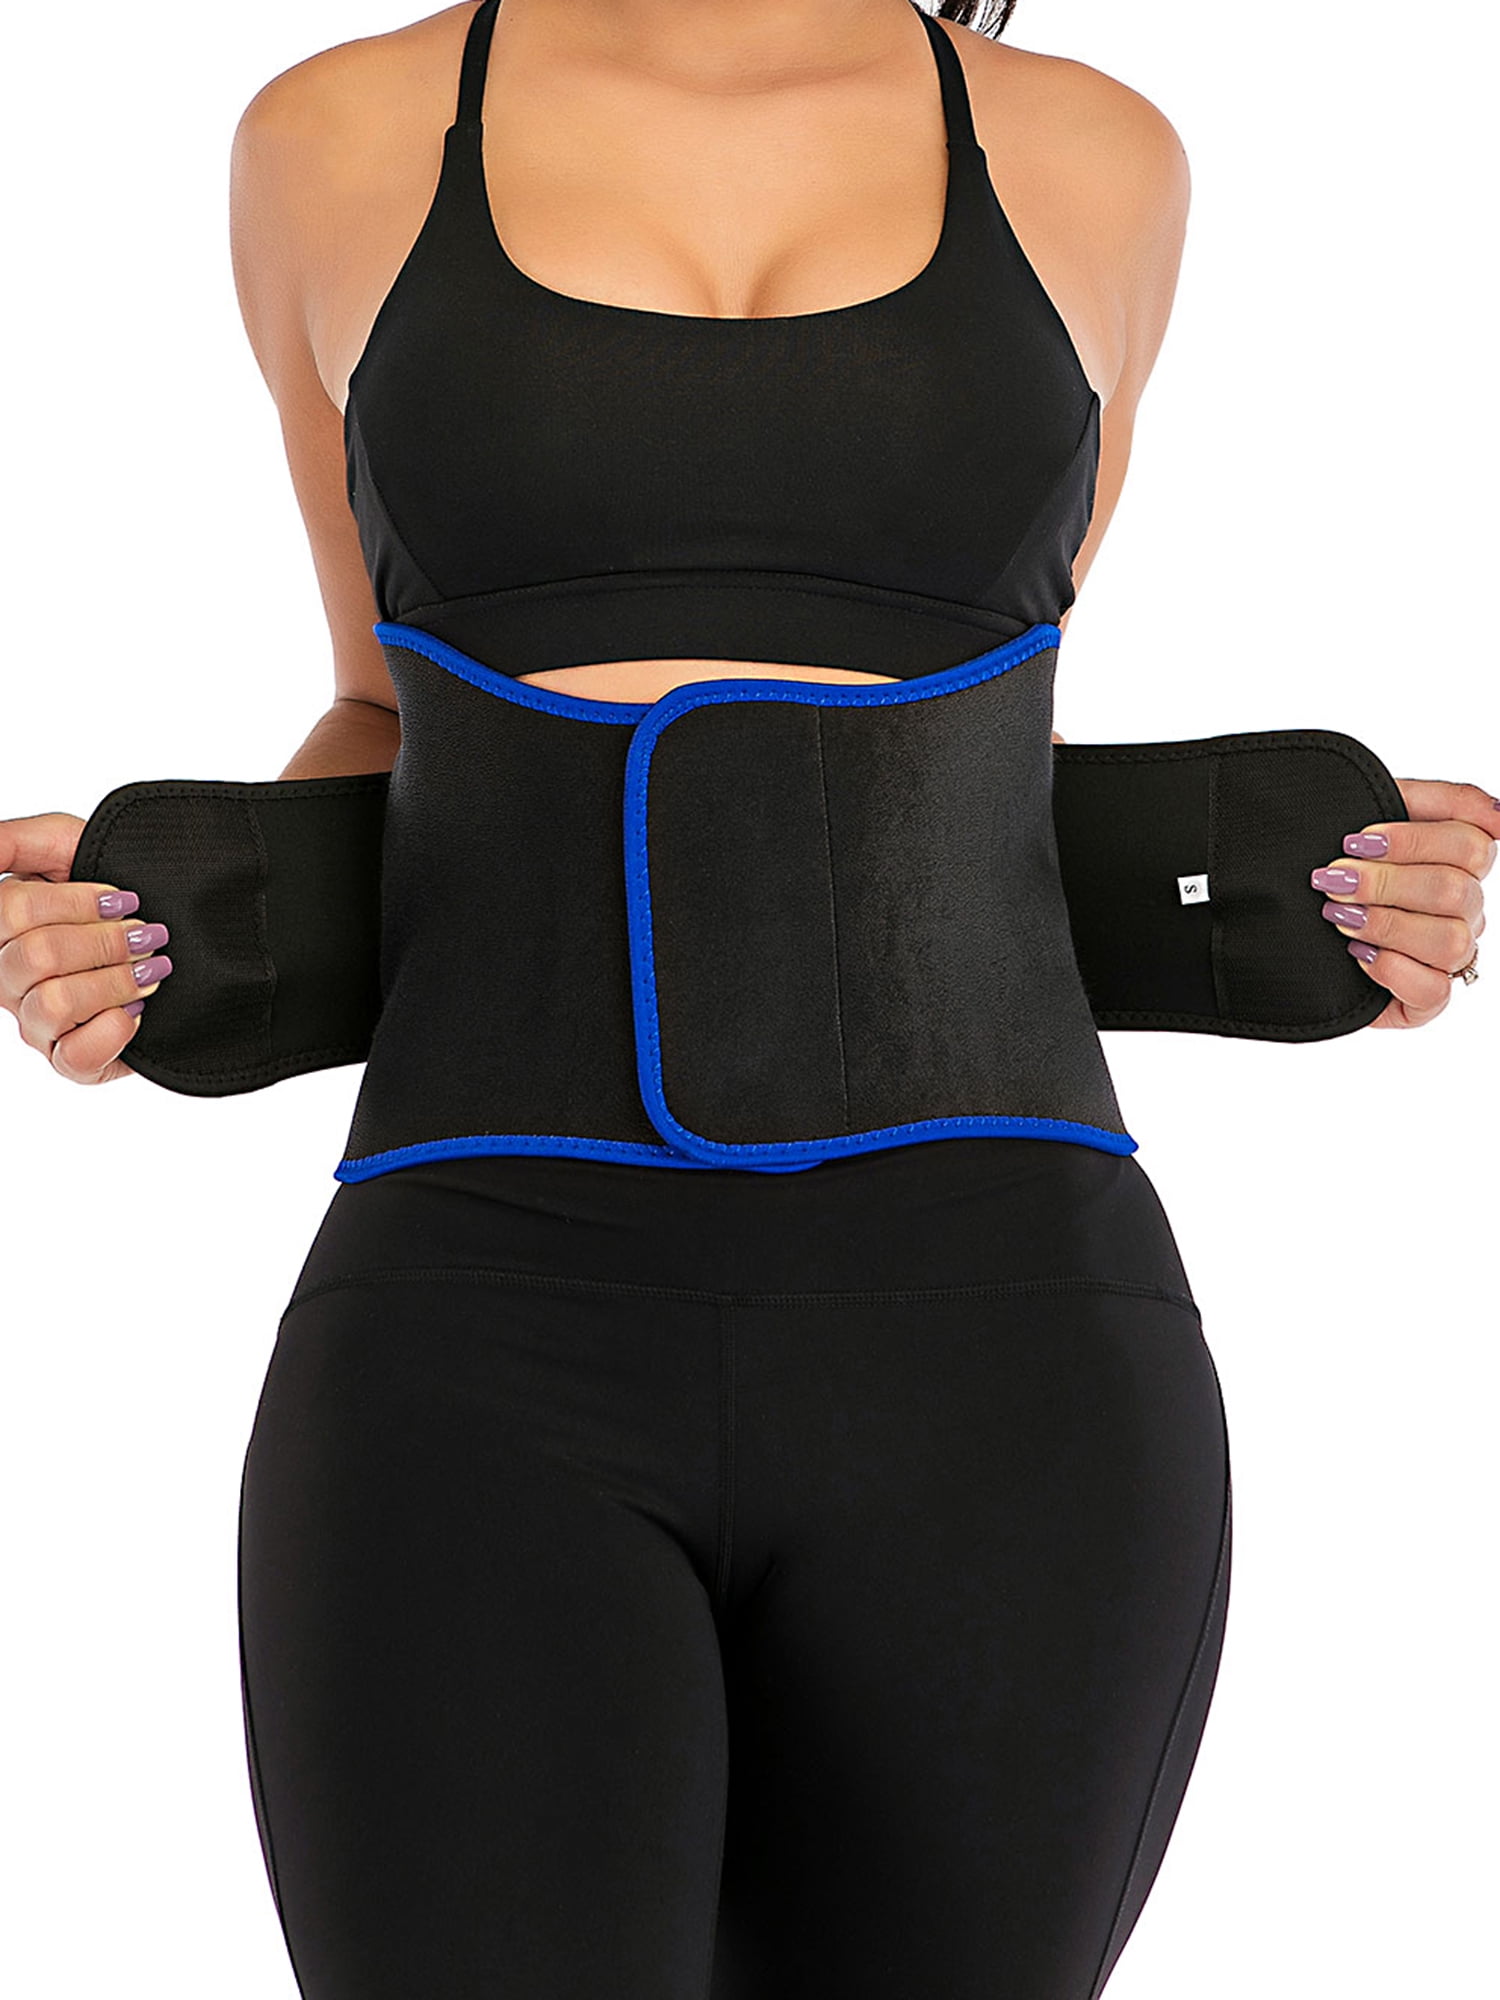 Waist Trimmer Belt Sweat Wrap Tummy Stomach Weight Loss Fat Burner Slimming Gym